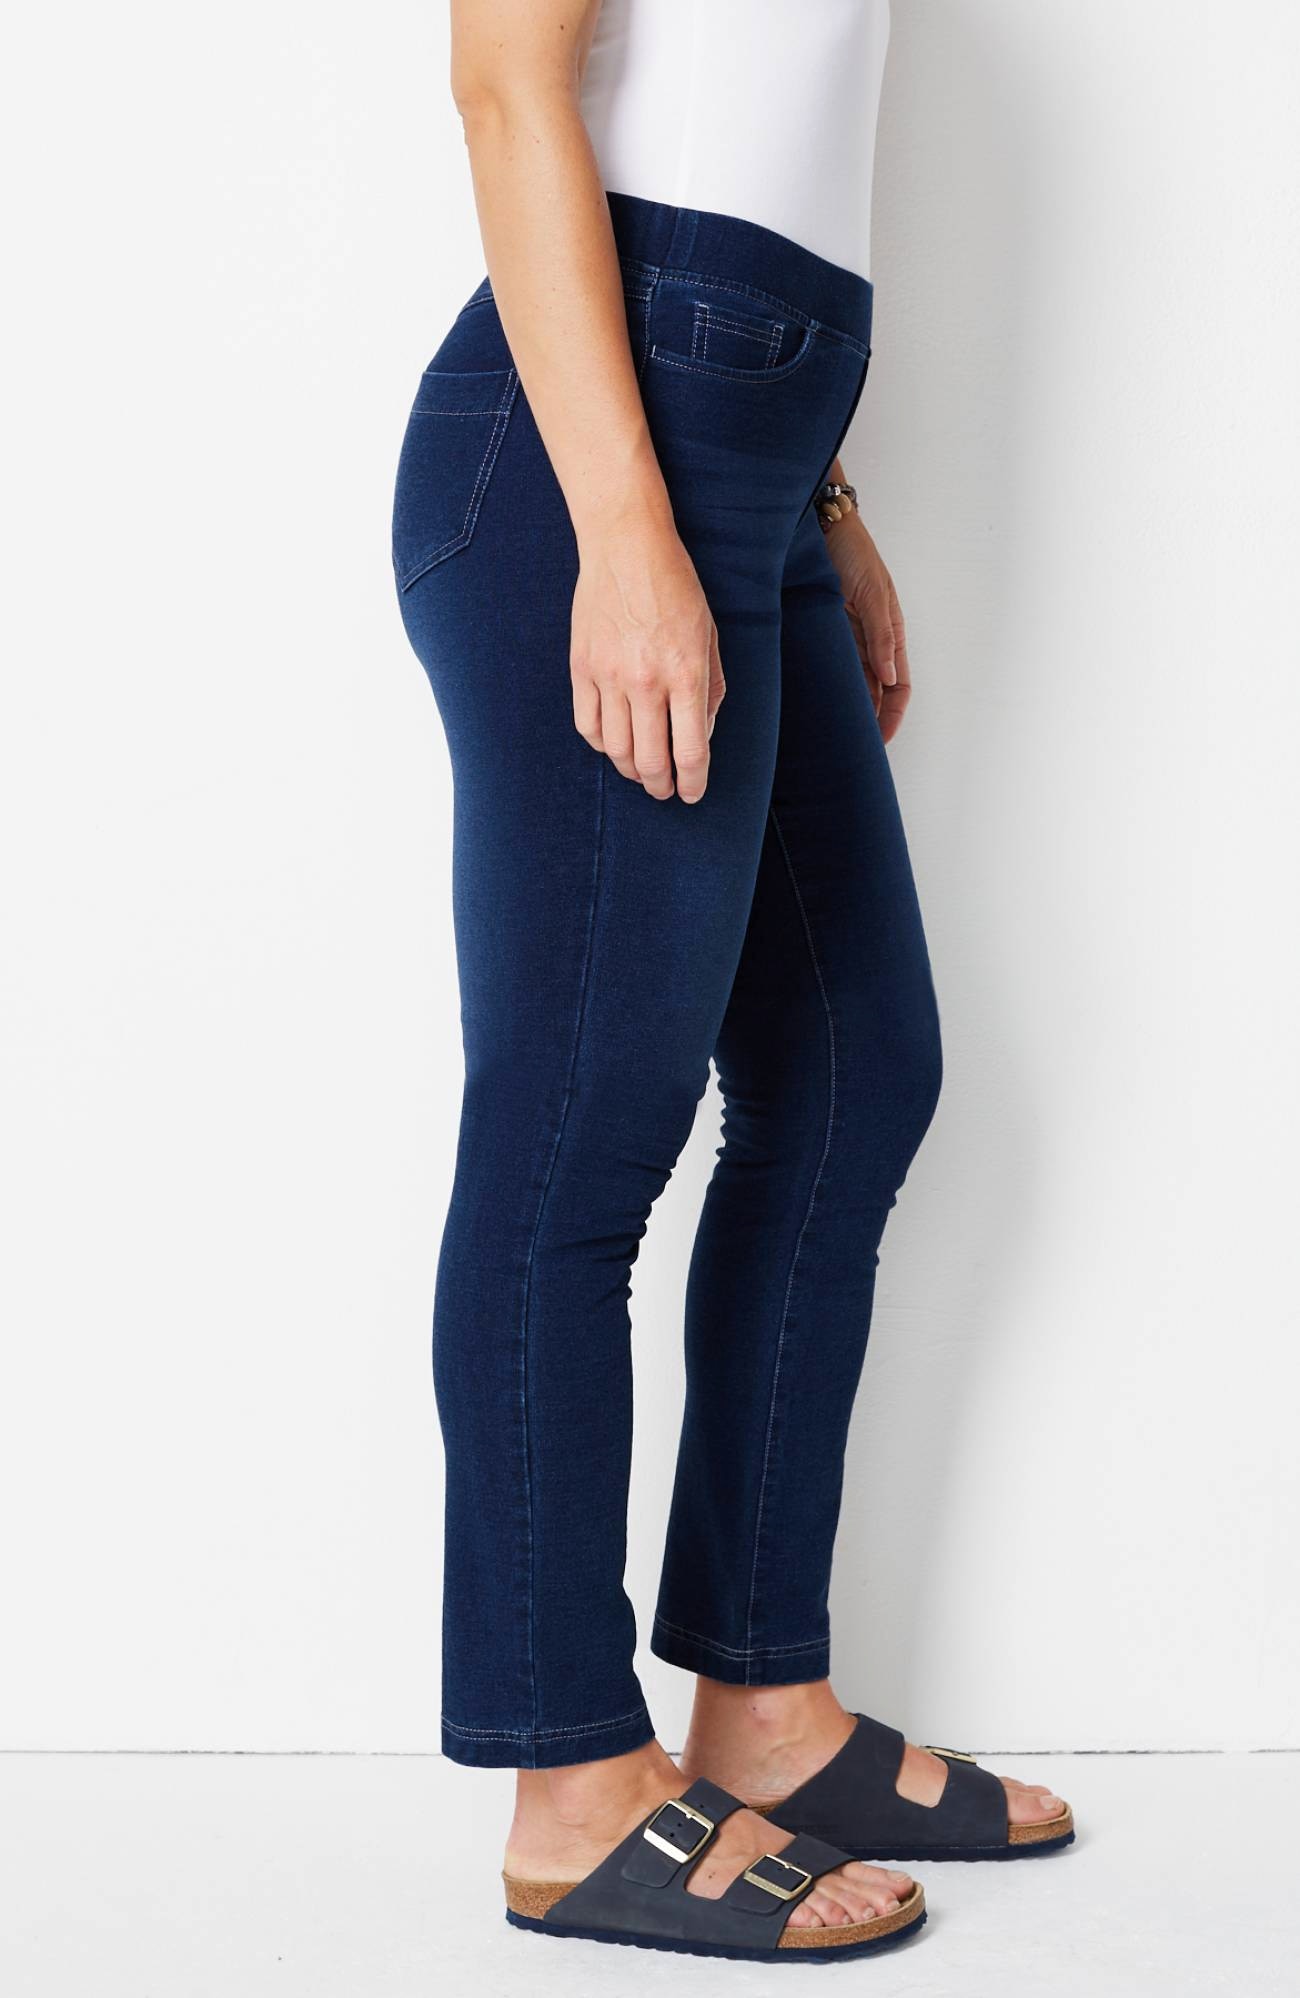 Pure Jill 5-Pocket Knit Pull-On Jeans